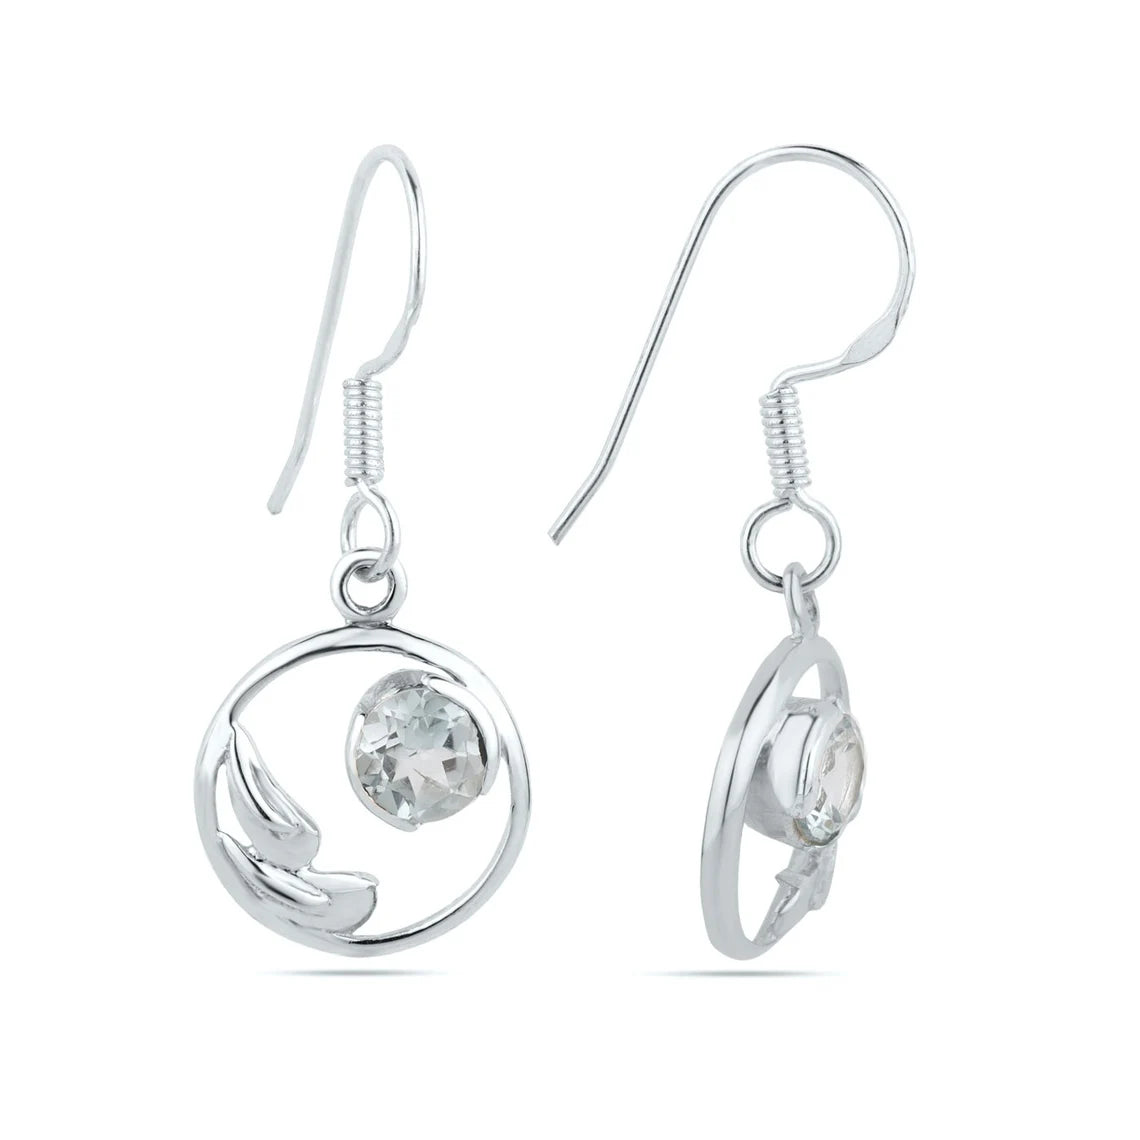 Citrine dangle earrings, Garnet earrings, iolite earrings, peridot earrings, citrine earrings, blue topaz earrings, 925 sterling silver